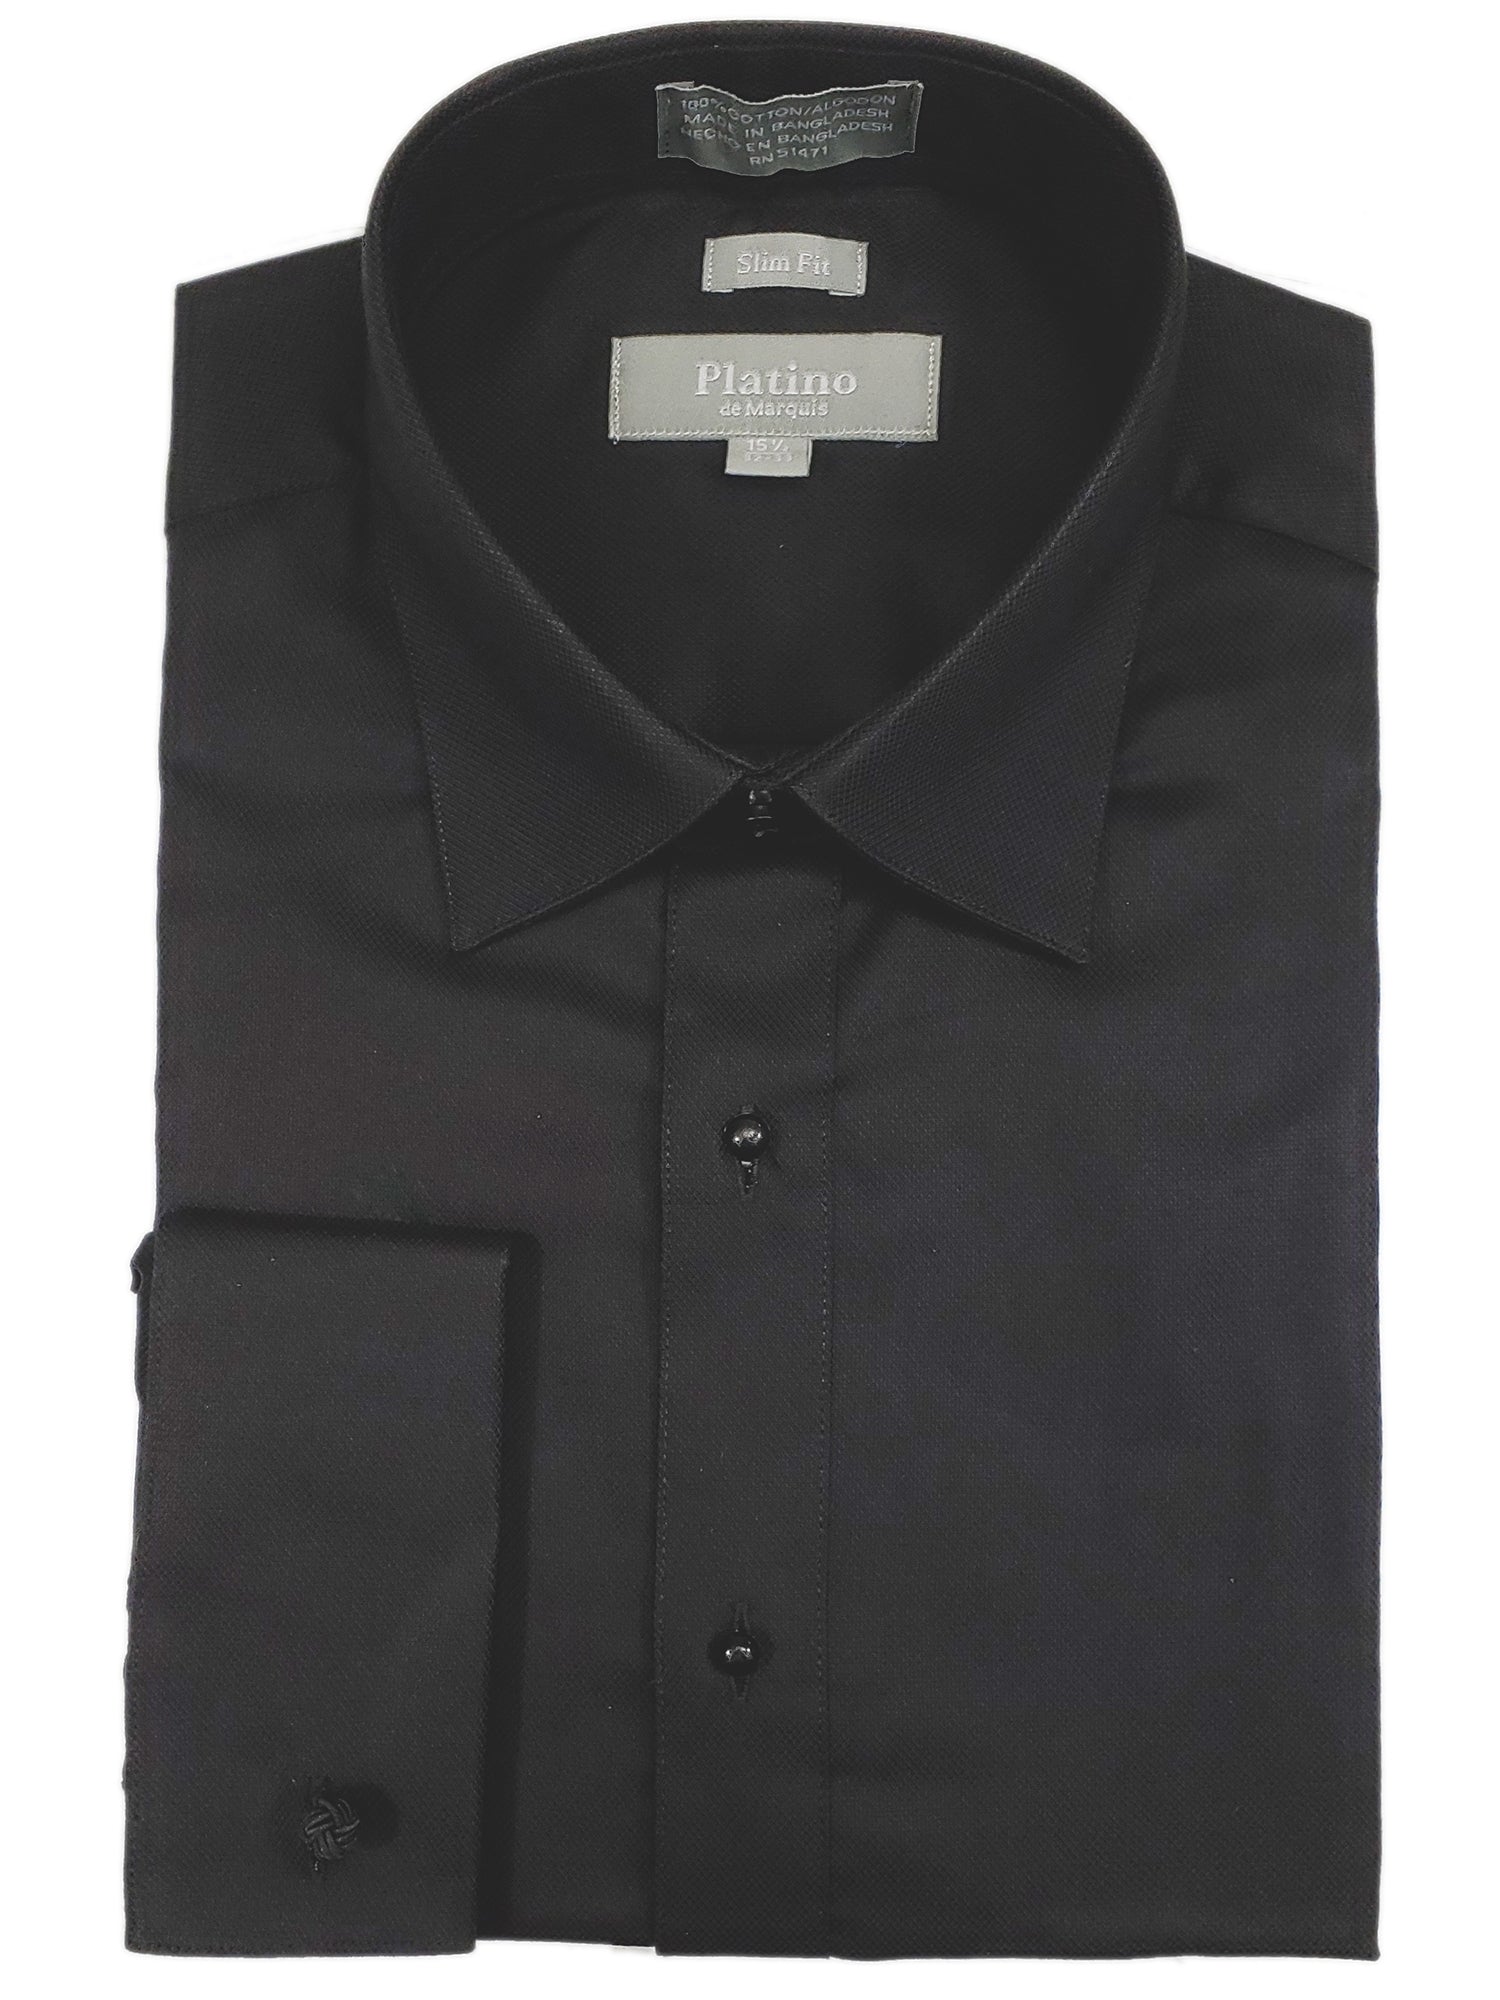 Men's Textured Slim Fit French Cuff Lay down Cotton Tuxedo Shirt Dress Shirt Marquis Black 15.5 Neck 32/33 Sleeve 